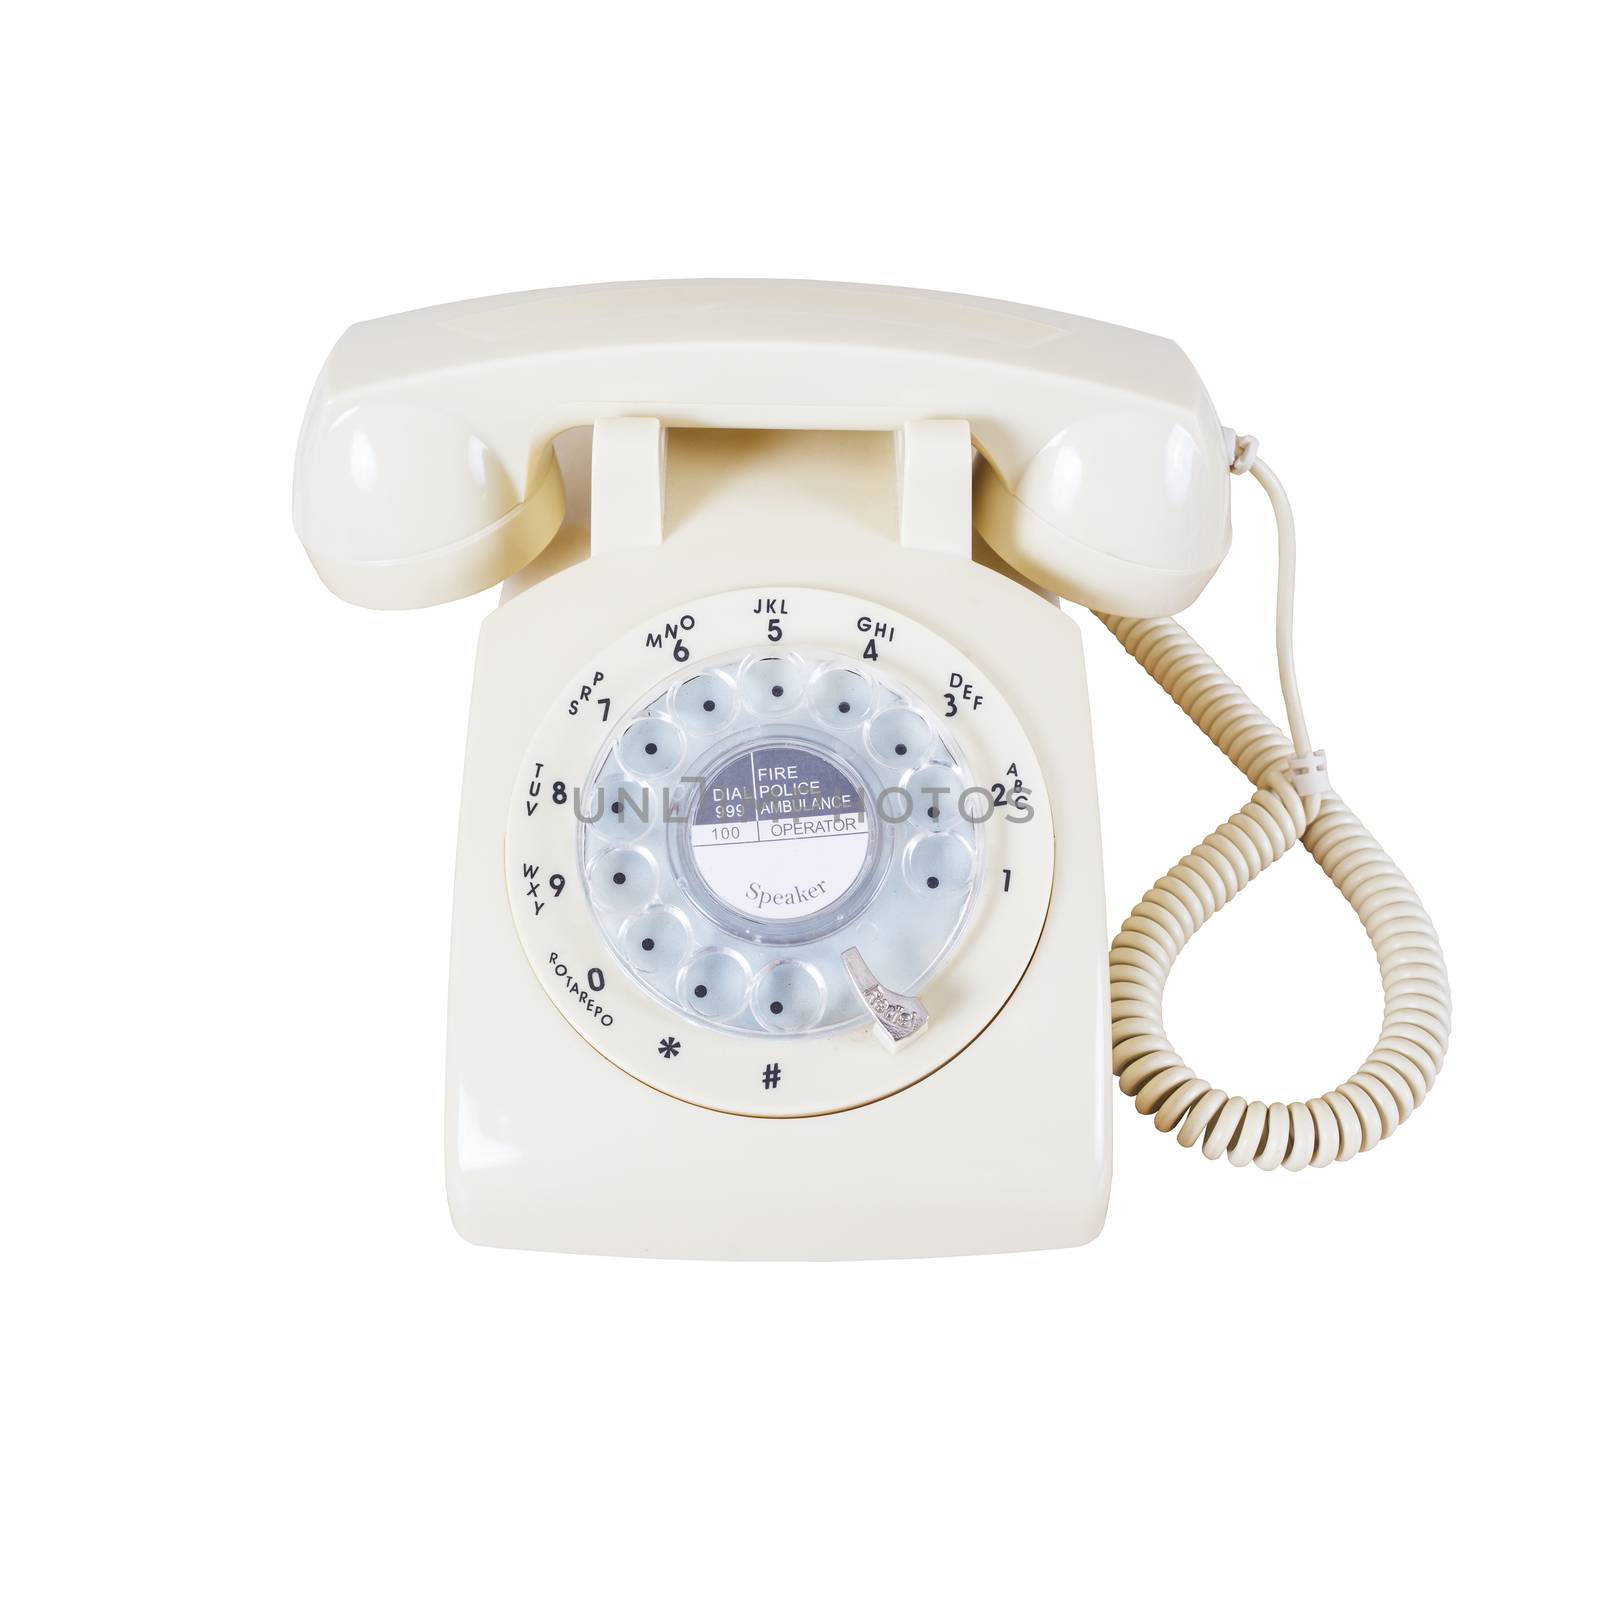 Retro rotary vintage telephone on white background